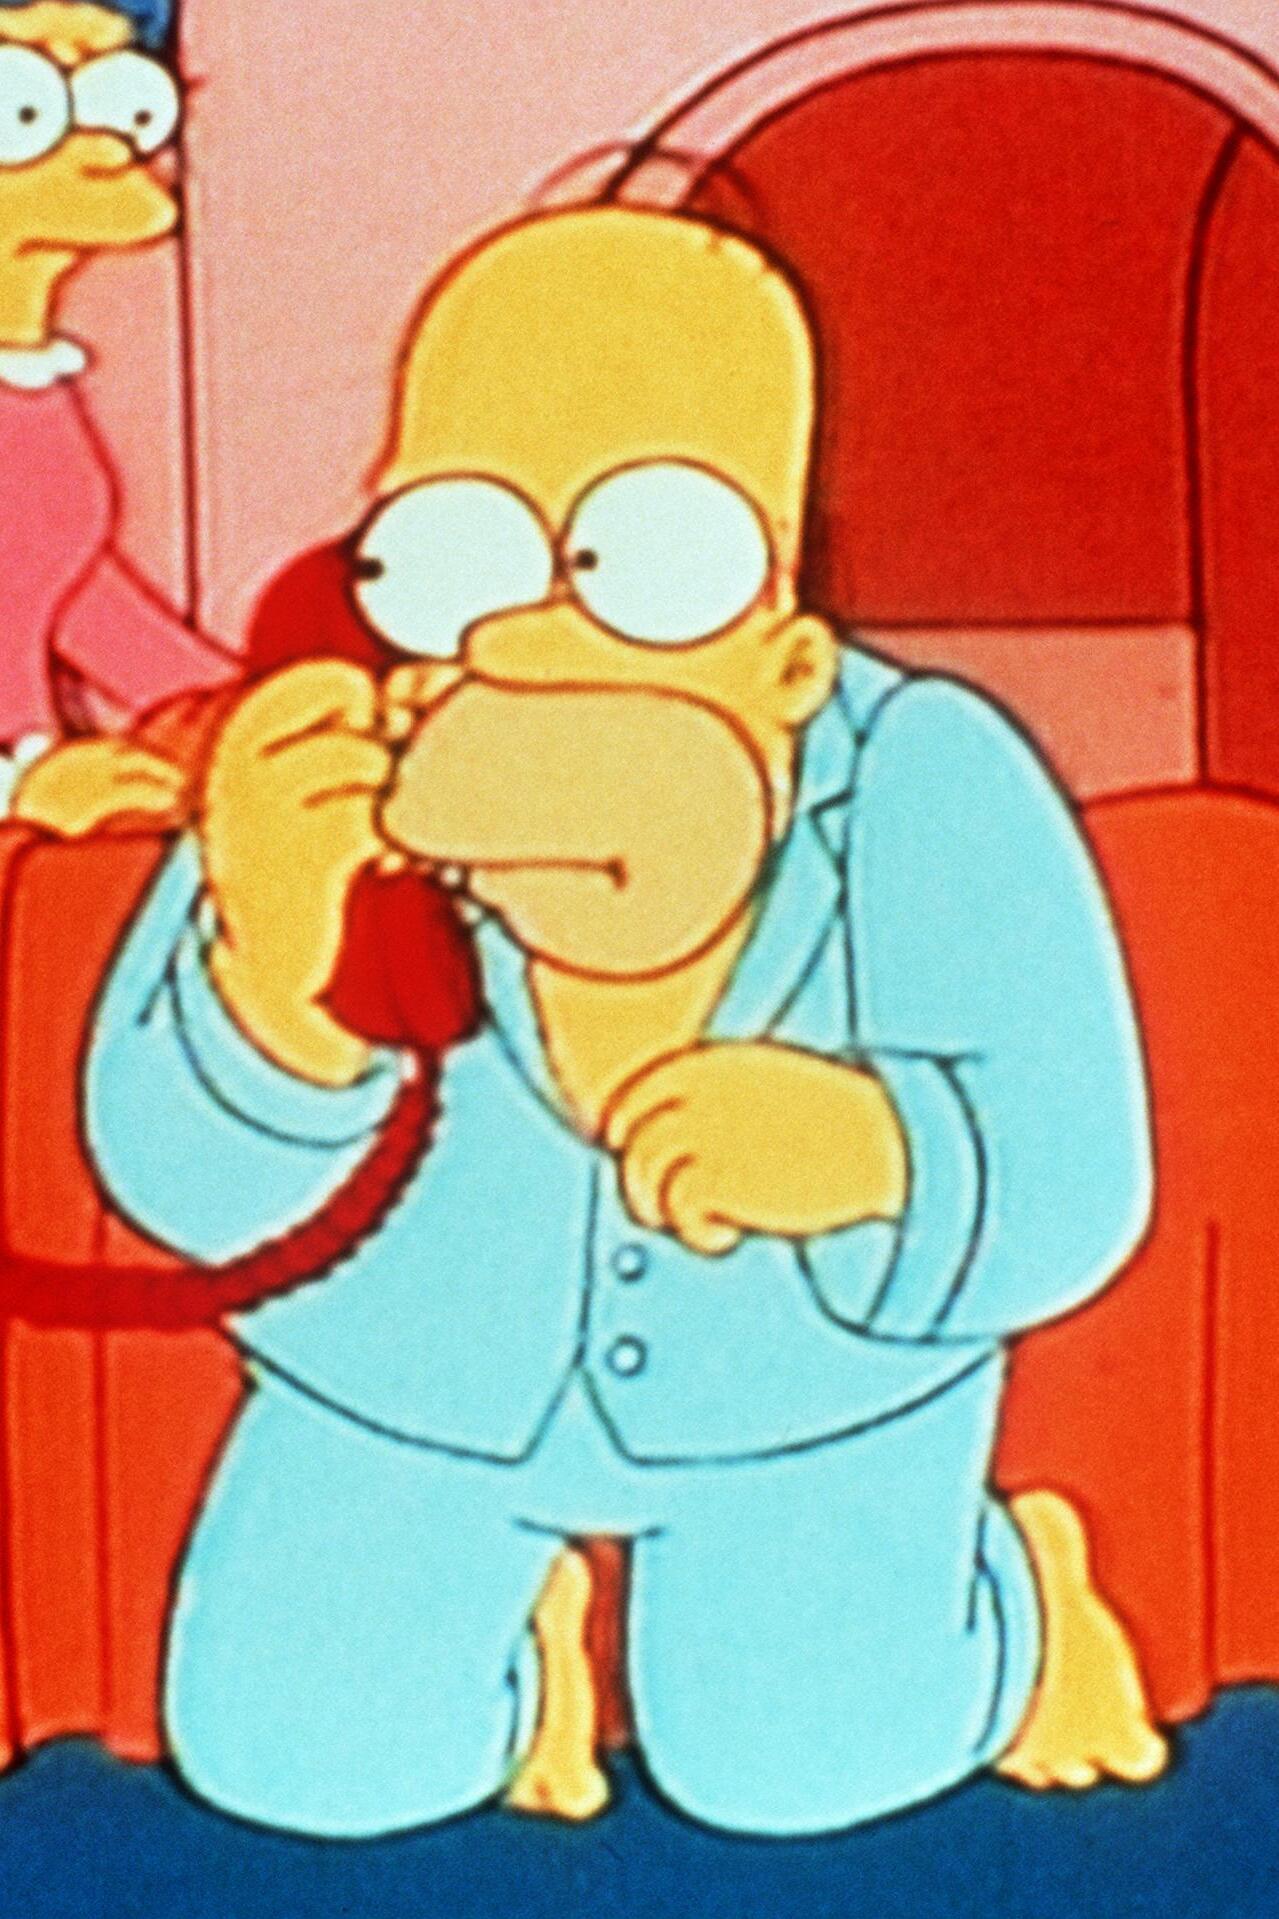 The Simpsons - Homer Badman